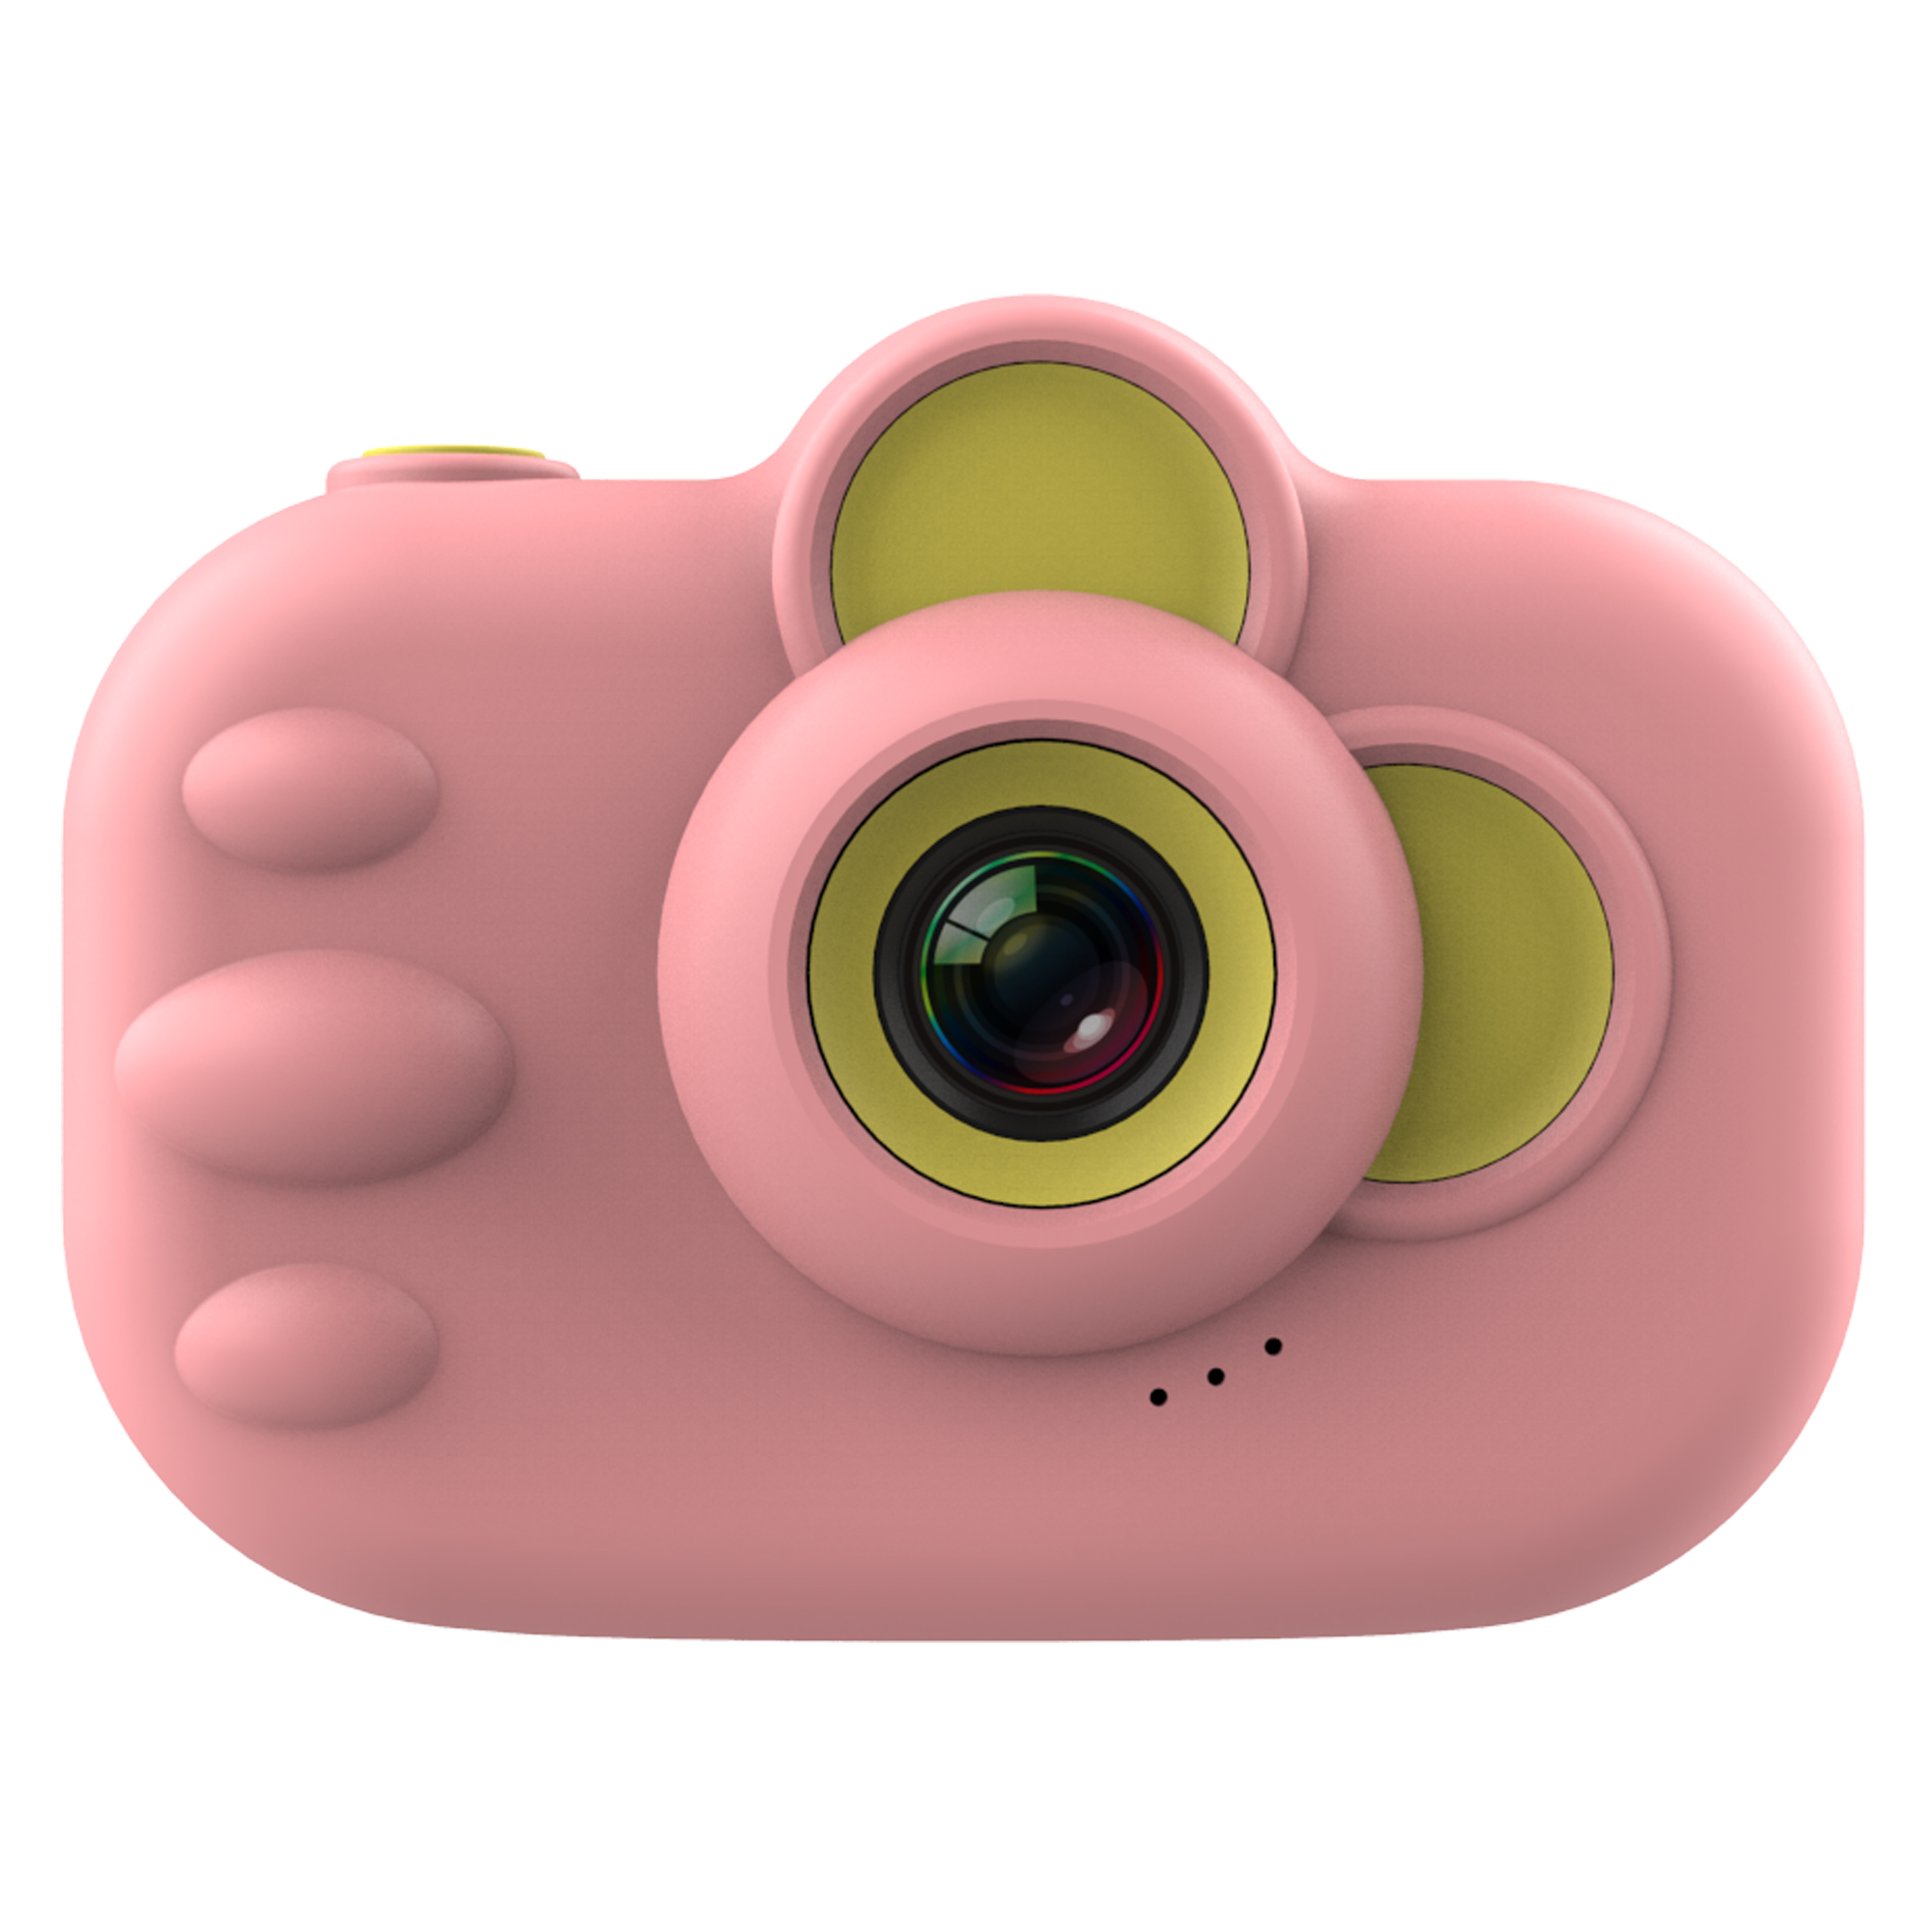 ET02 키즈 카메라, 사진 찍을 수 있는 어린이 디지털 장난감 카메라, 1080p HD 카메라 장난감, 남아 여아 생일 선물